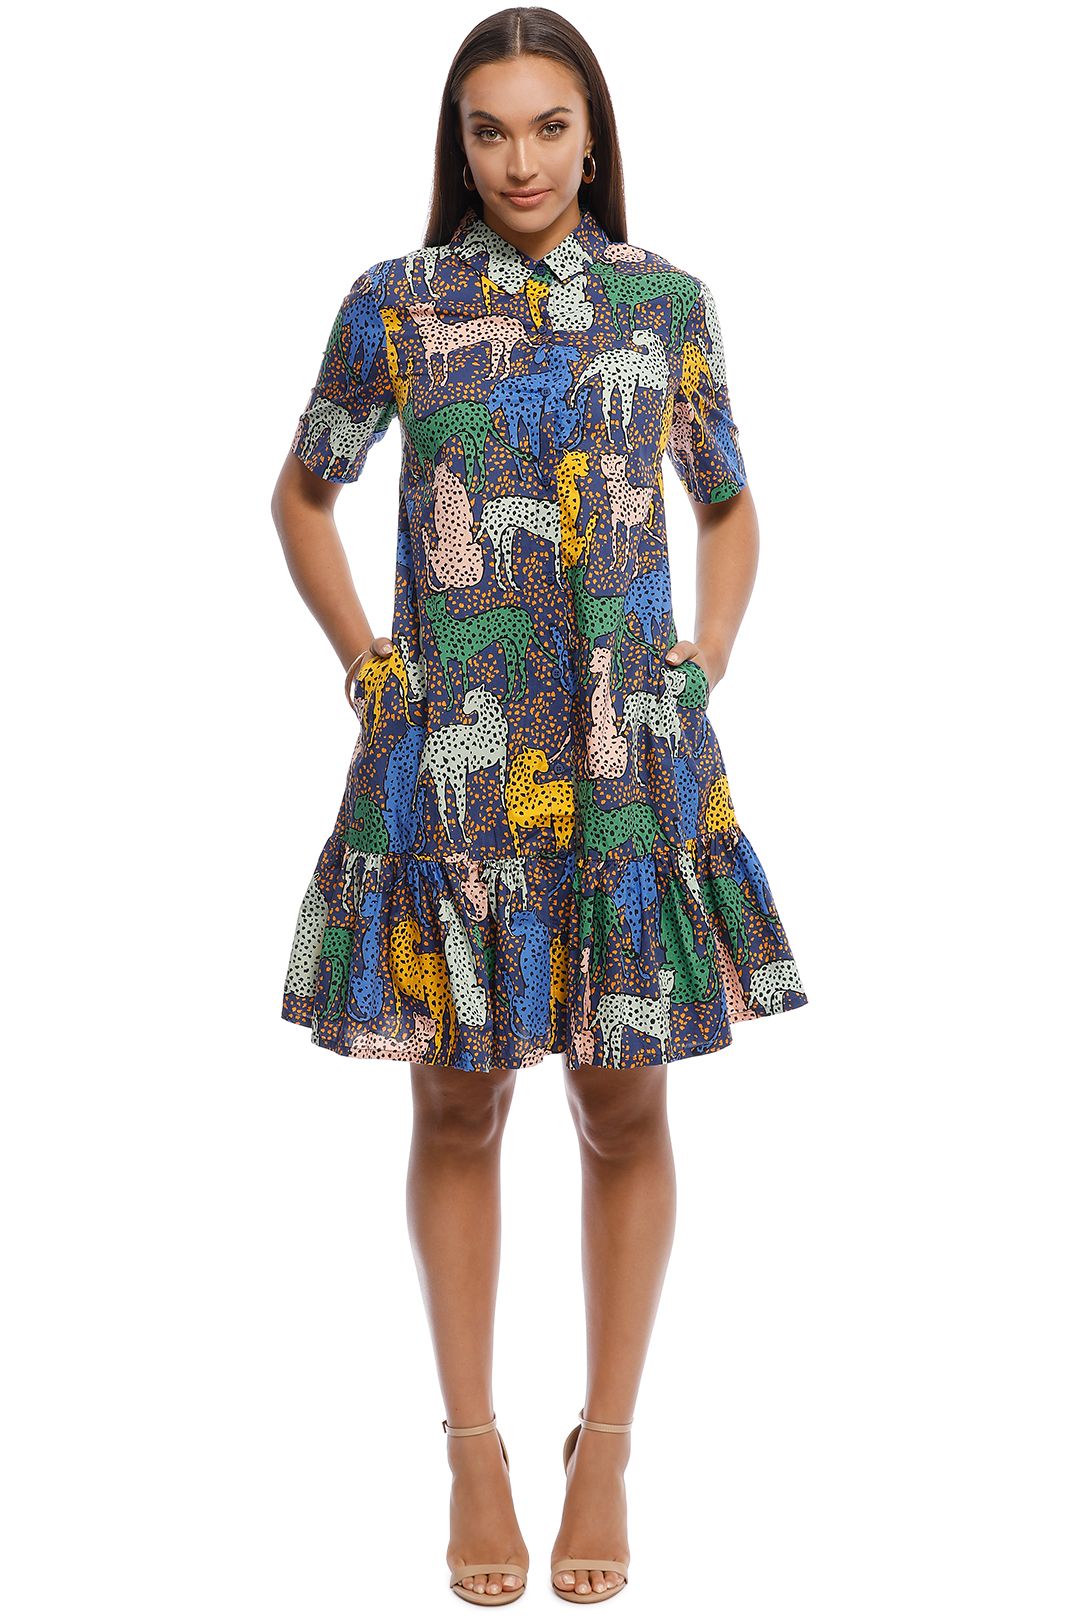 Gorman - Cheetah Print Dress - Multi - Front